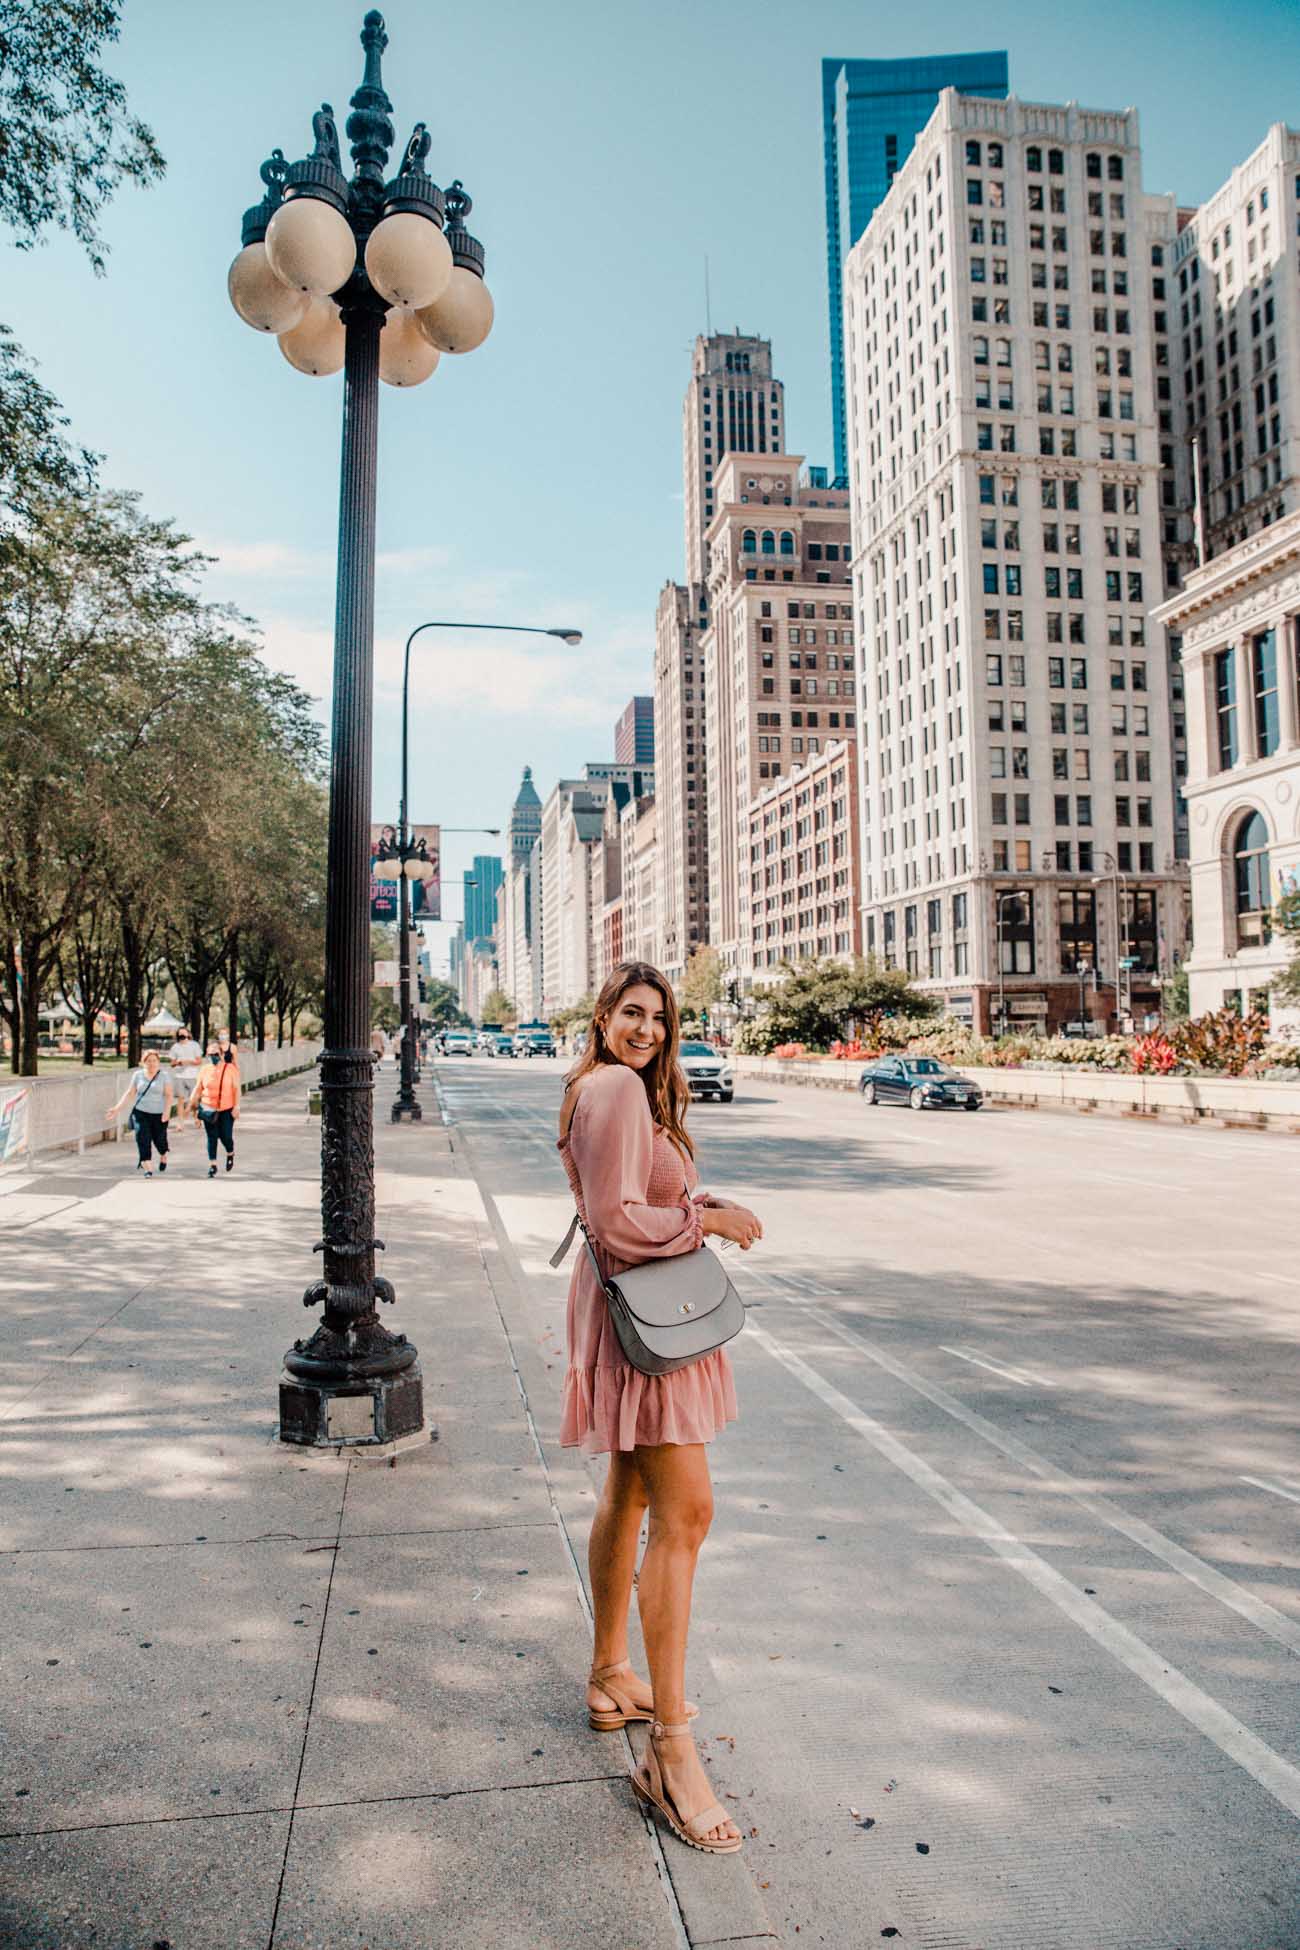 Chicago Instagram Spots